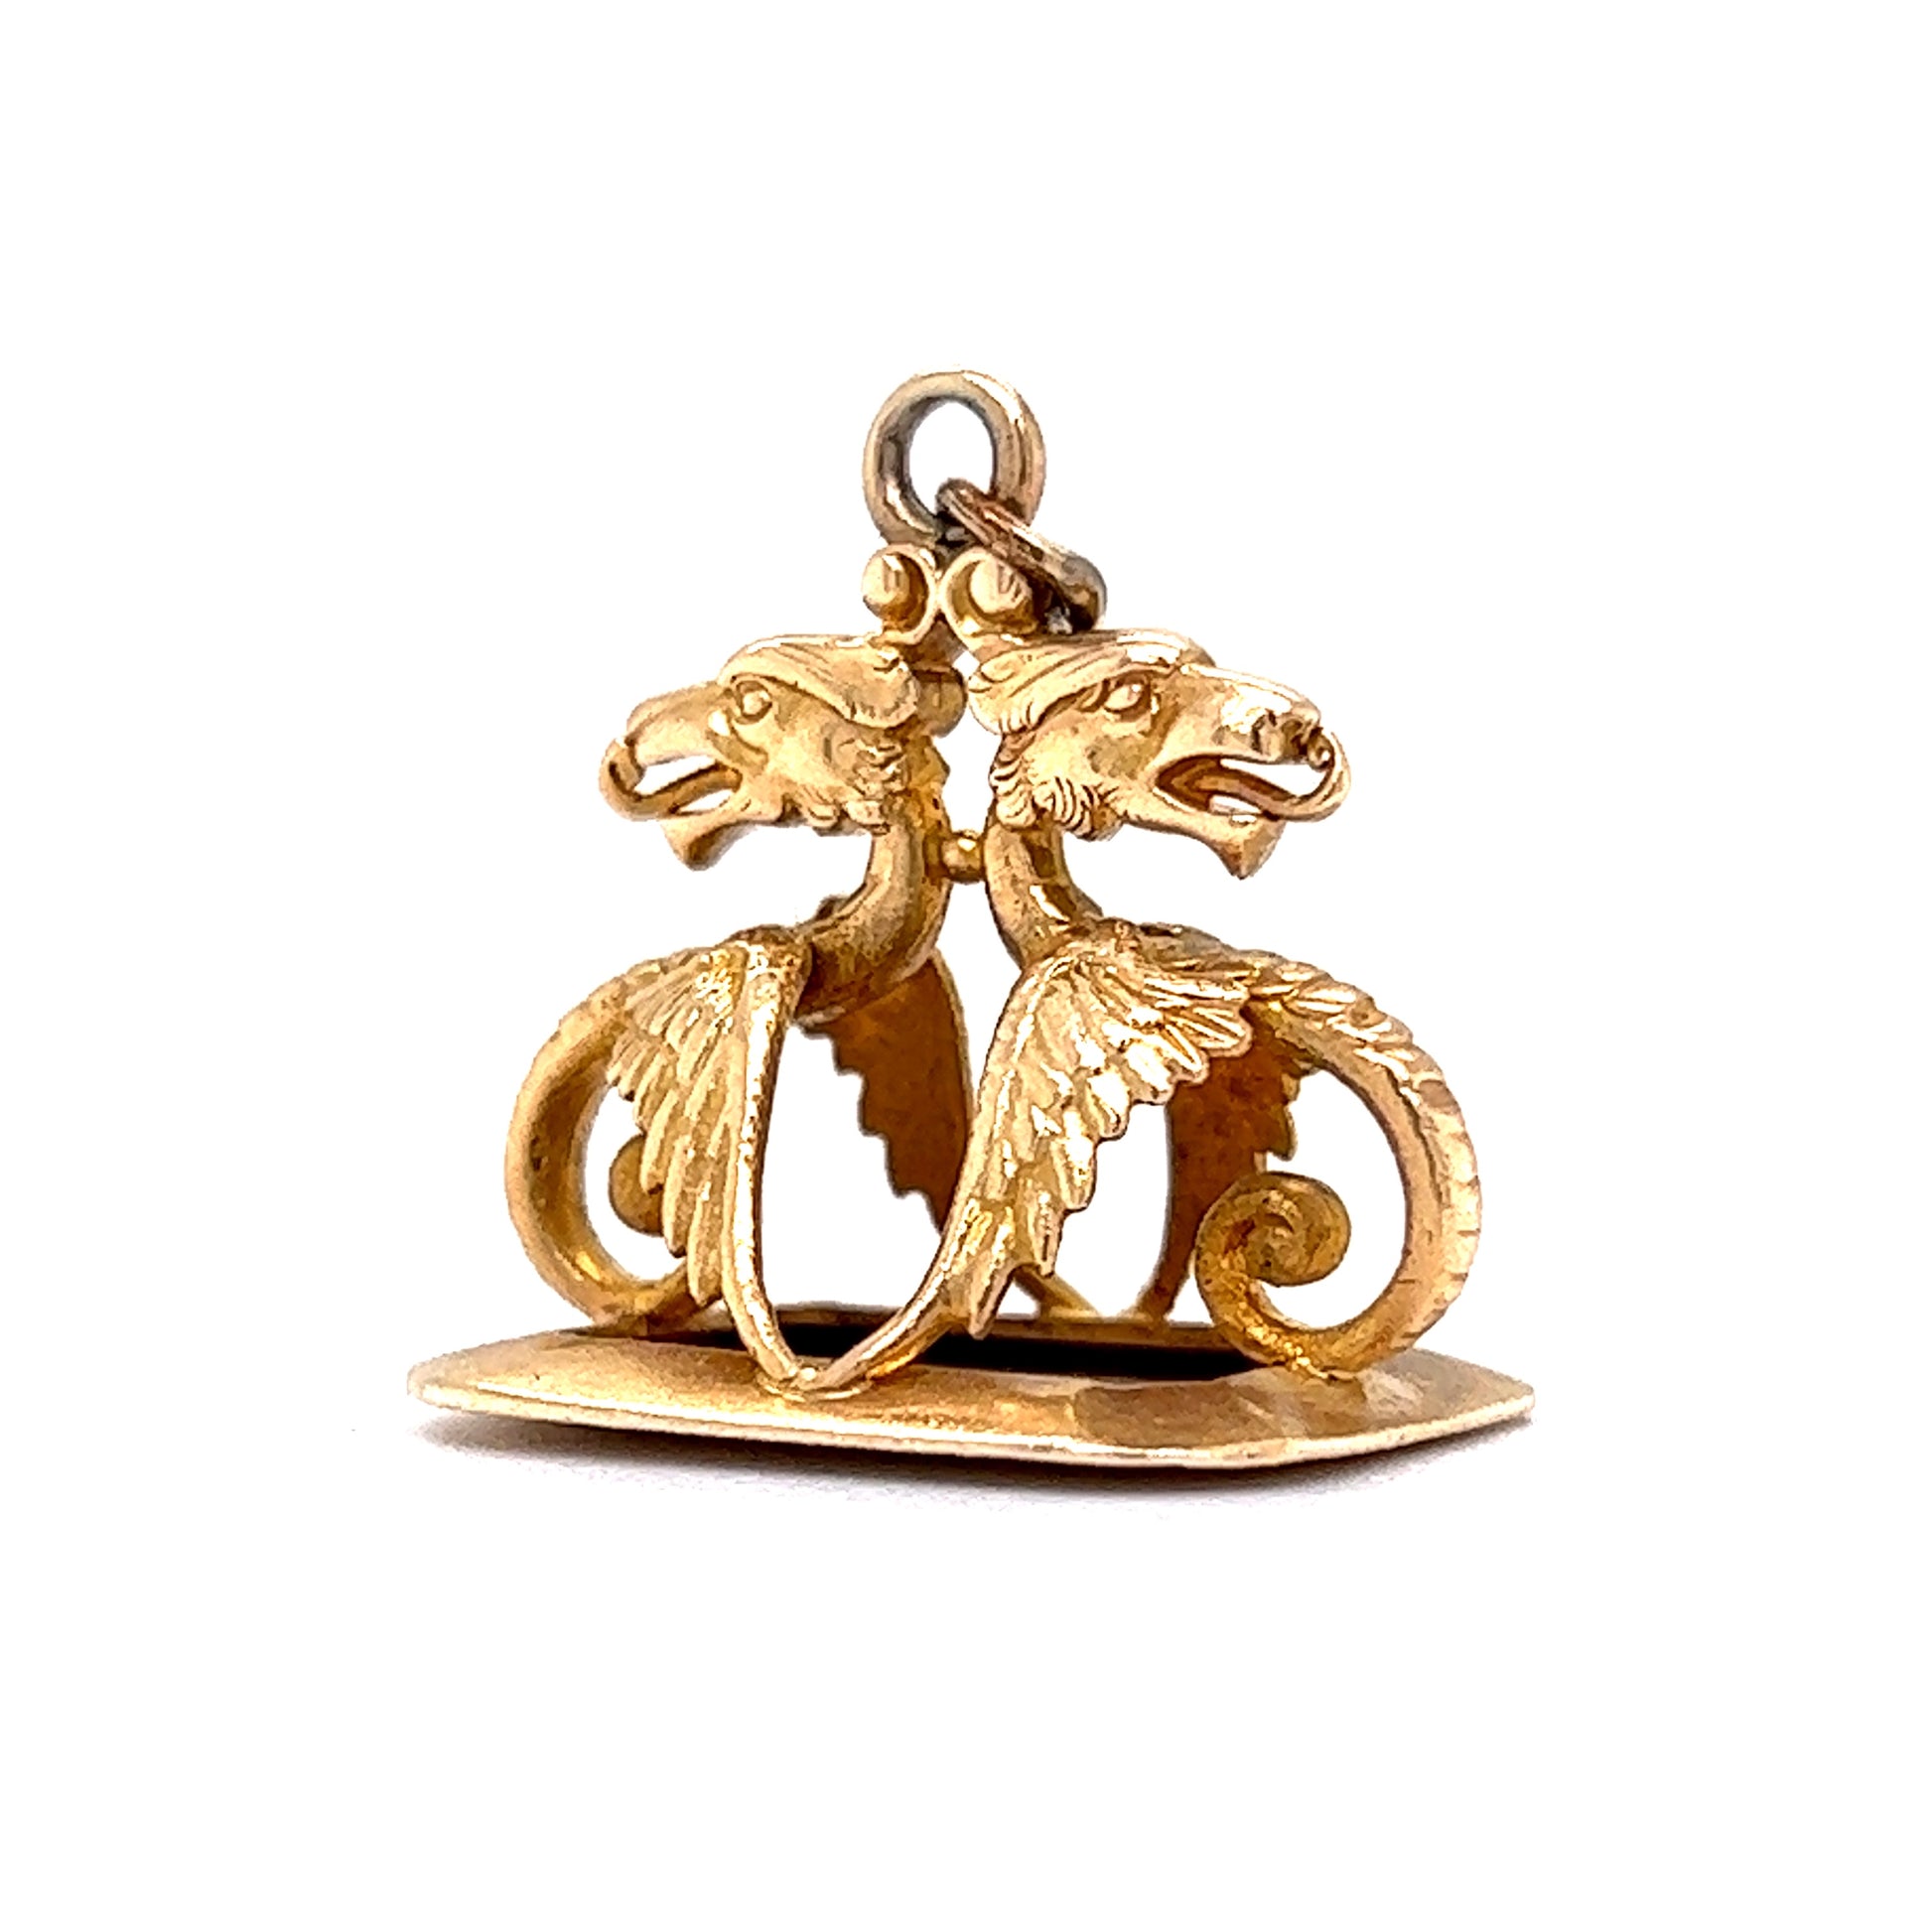 5 Pcs Necklace Connectors Dragon Charms Jewelry Making Vintage Antique